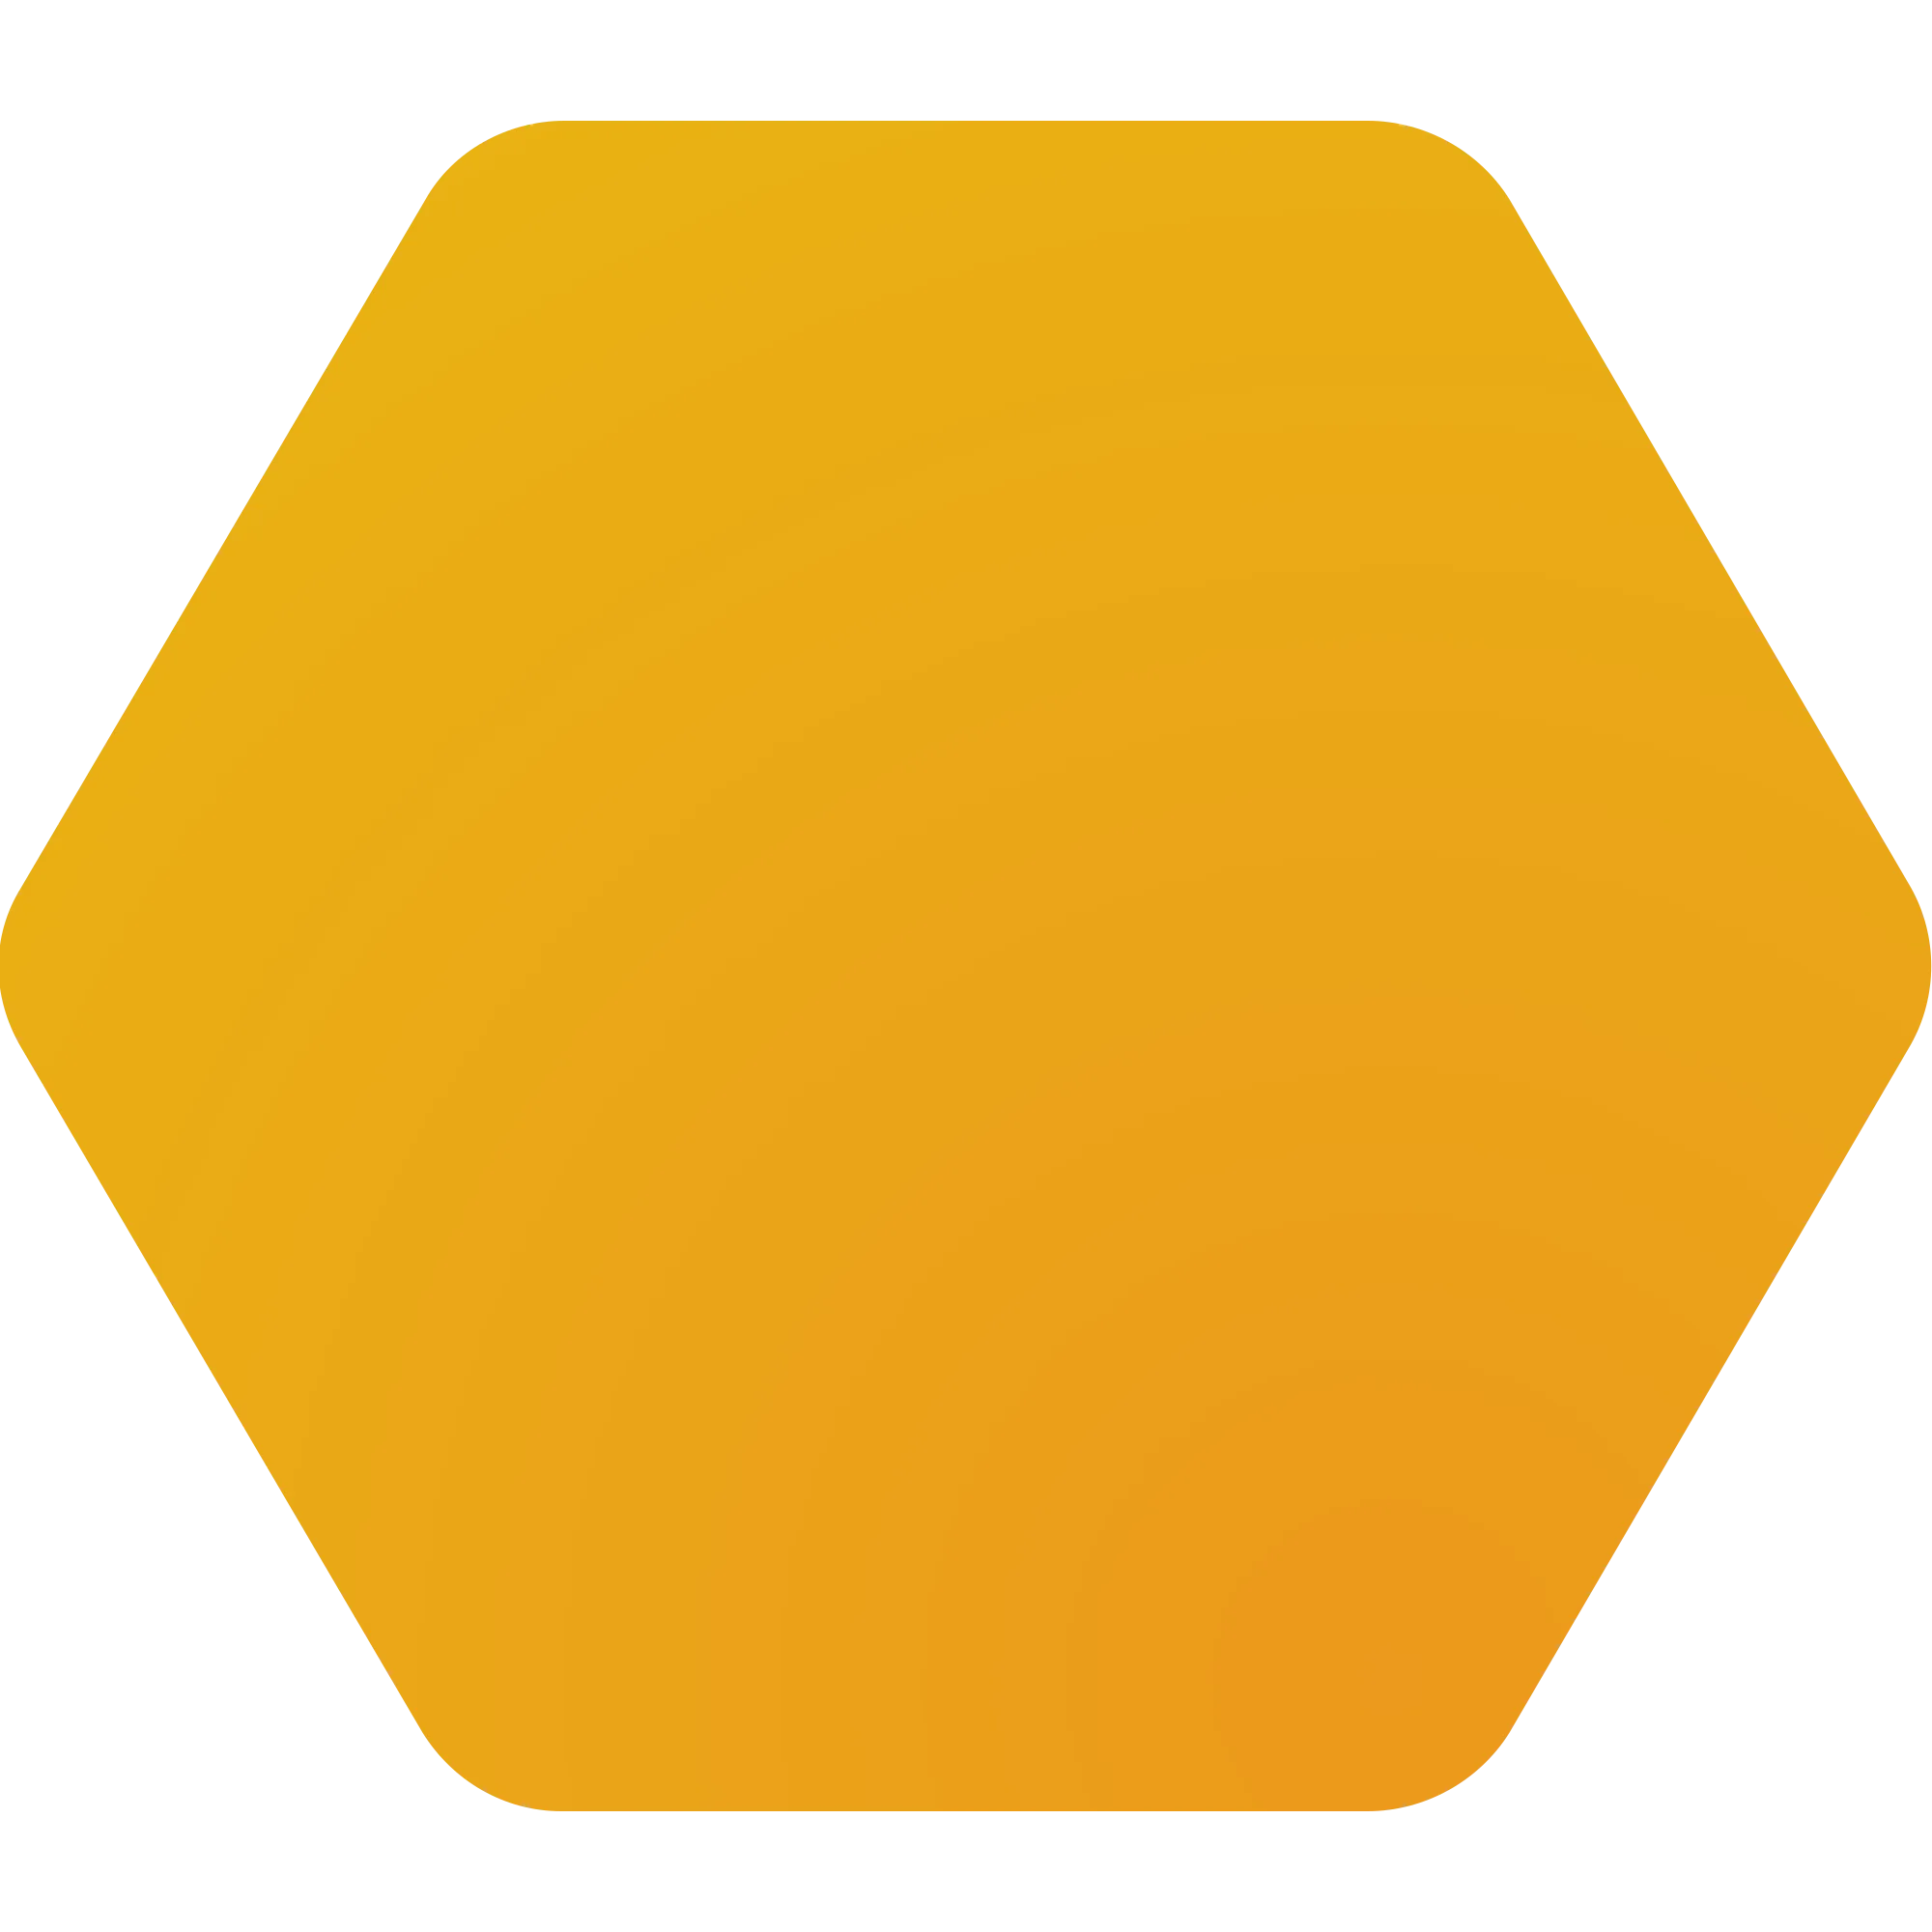 Nimiq logo in png format